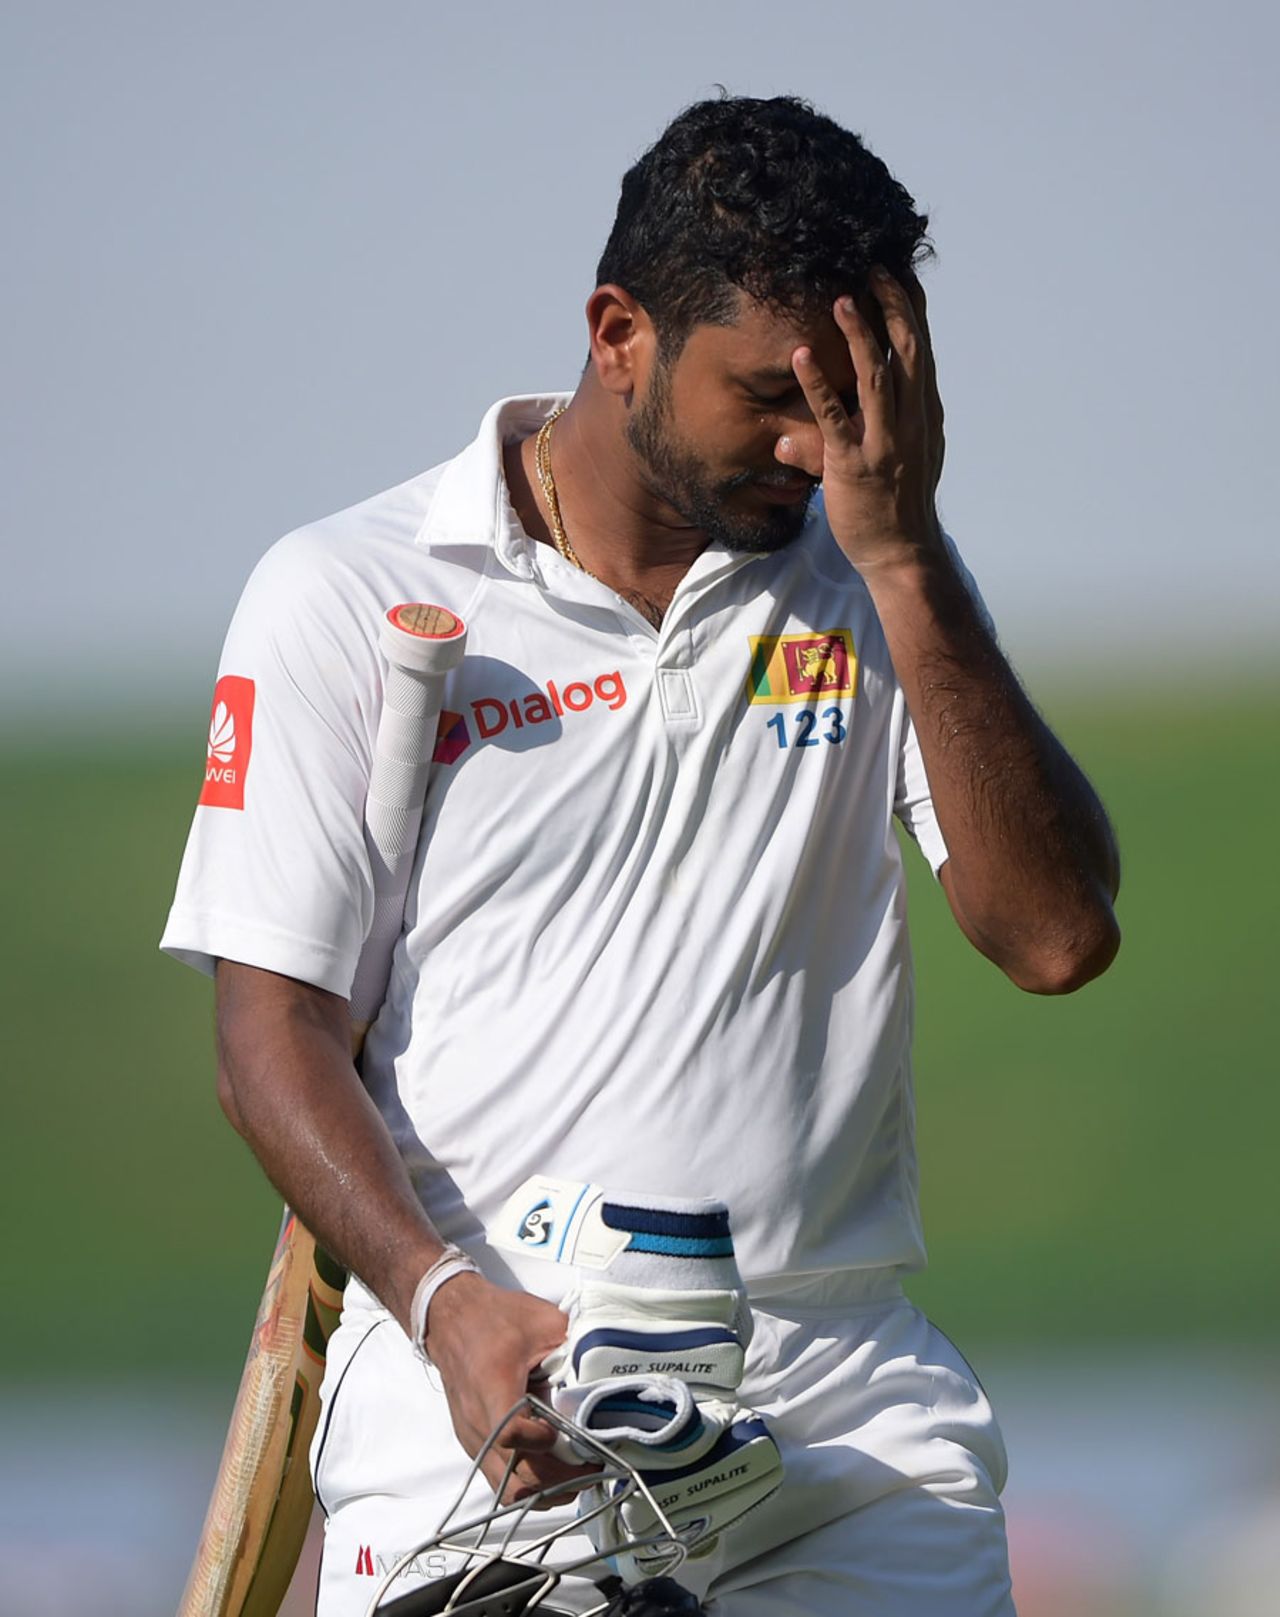 A dejected Dimuth Karunaratne walks off the field, Pakistan v Sri Lanka, 1st Test, 1st day, Abu Dhabi, 28 September, 2017